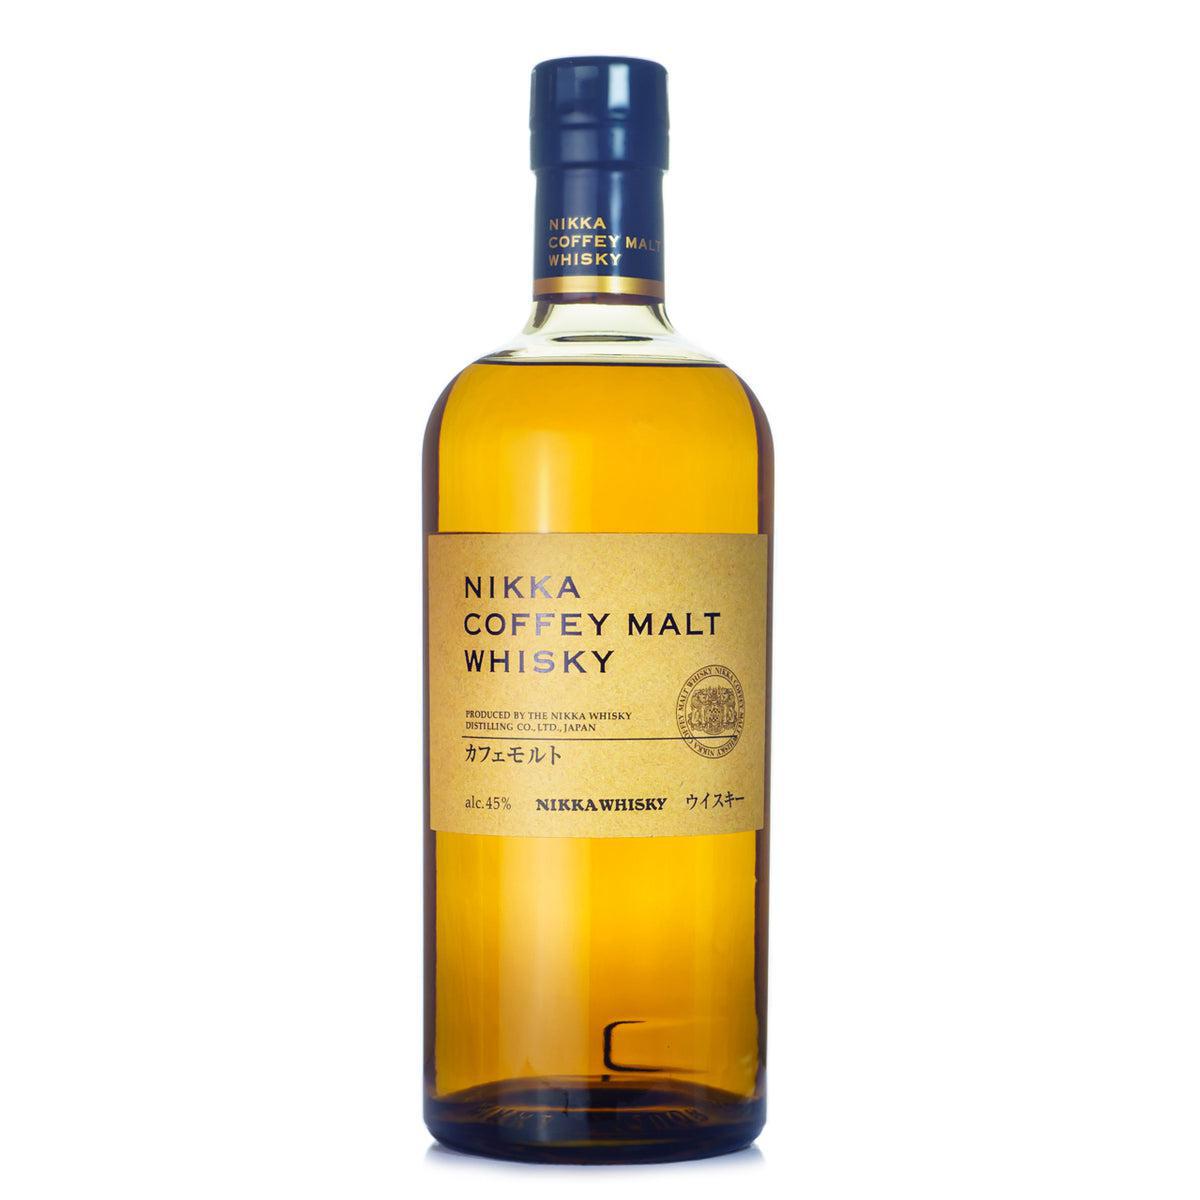 Nikka Whisky Distilling - 'Coffey Malt' Japanese Whisky (750ML)